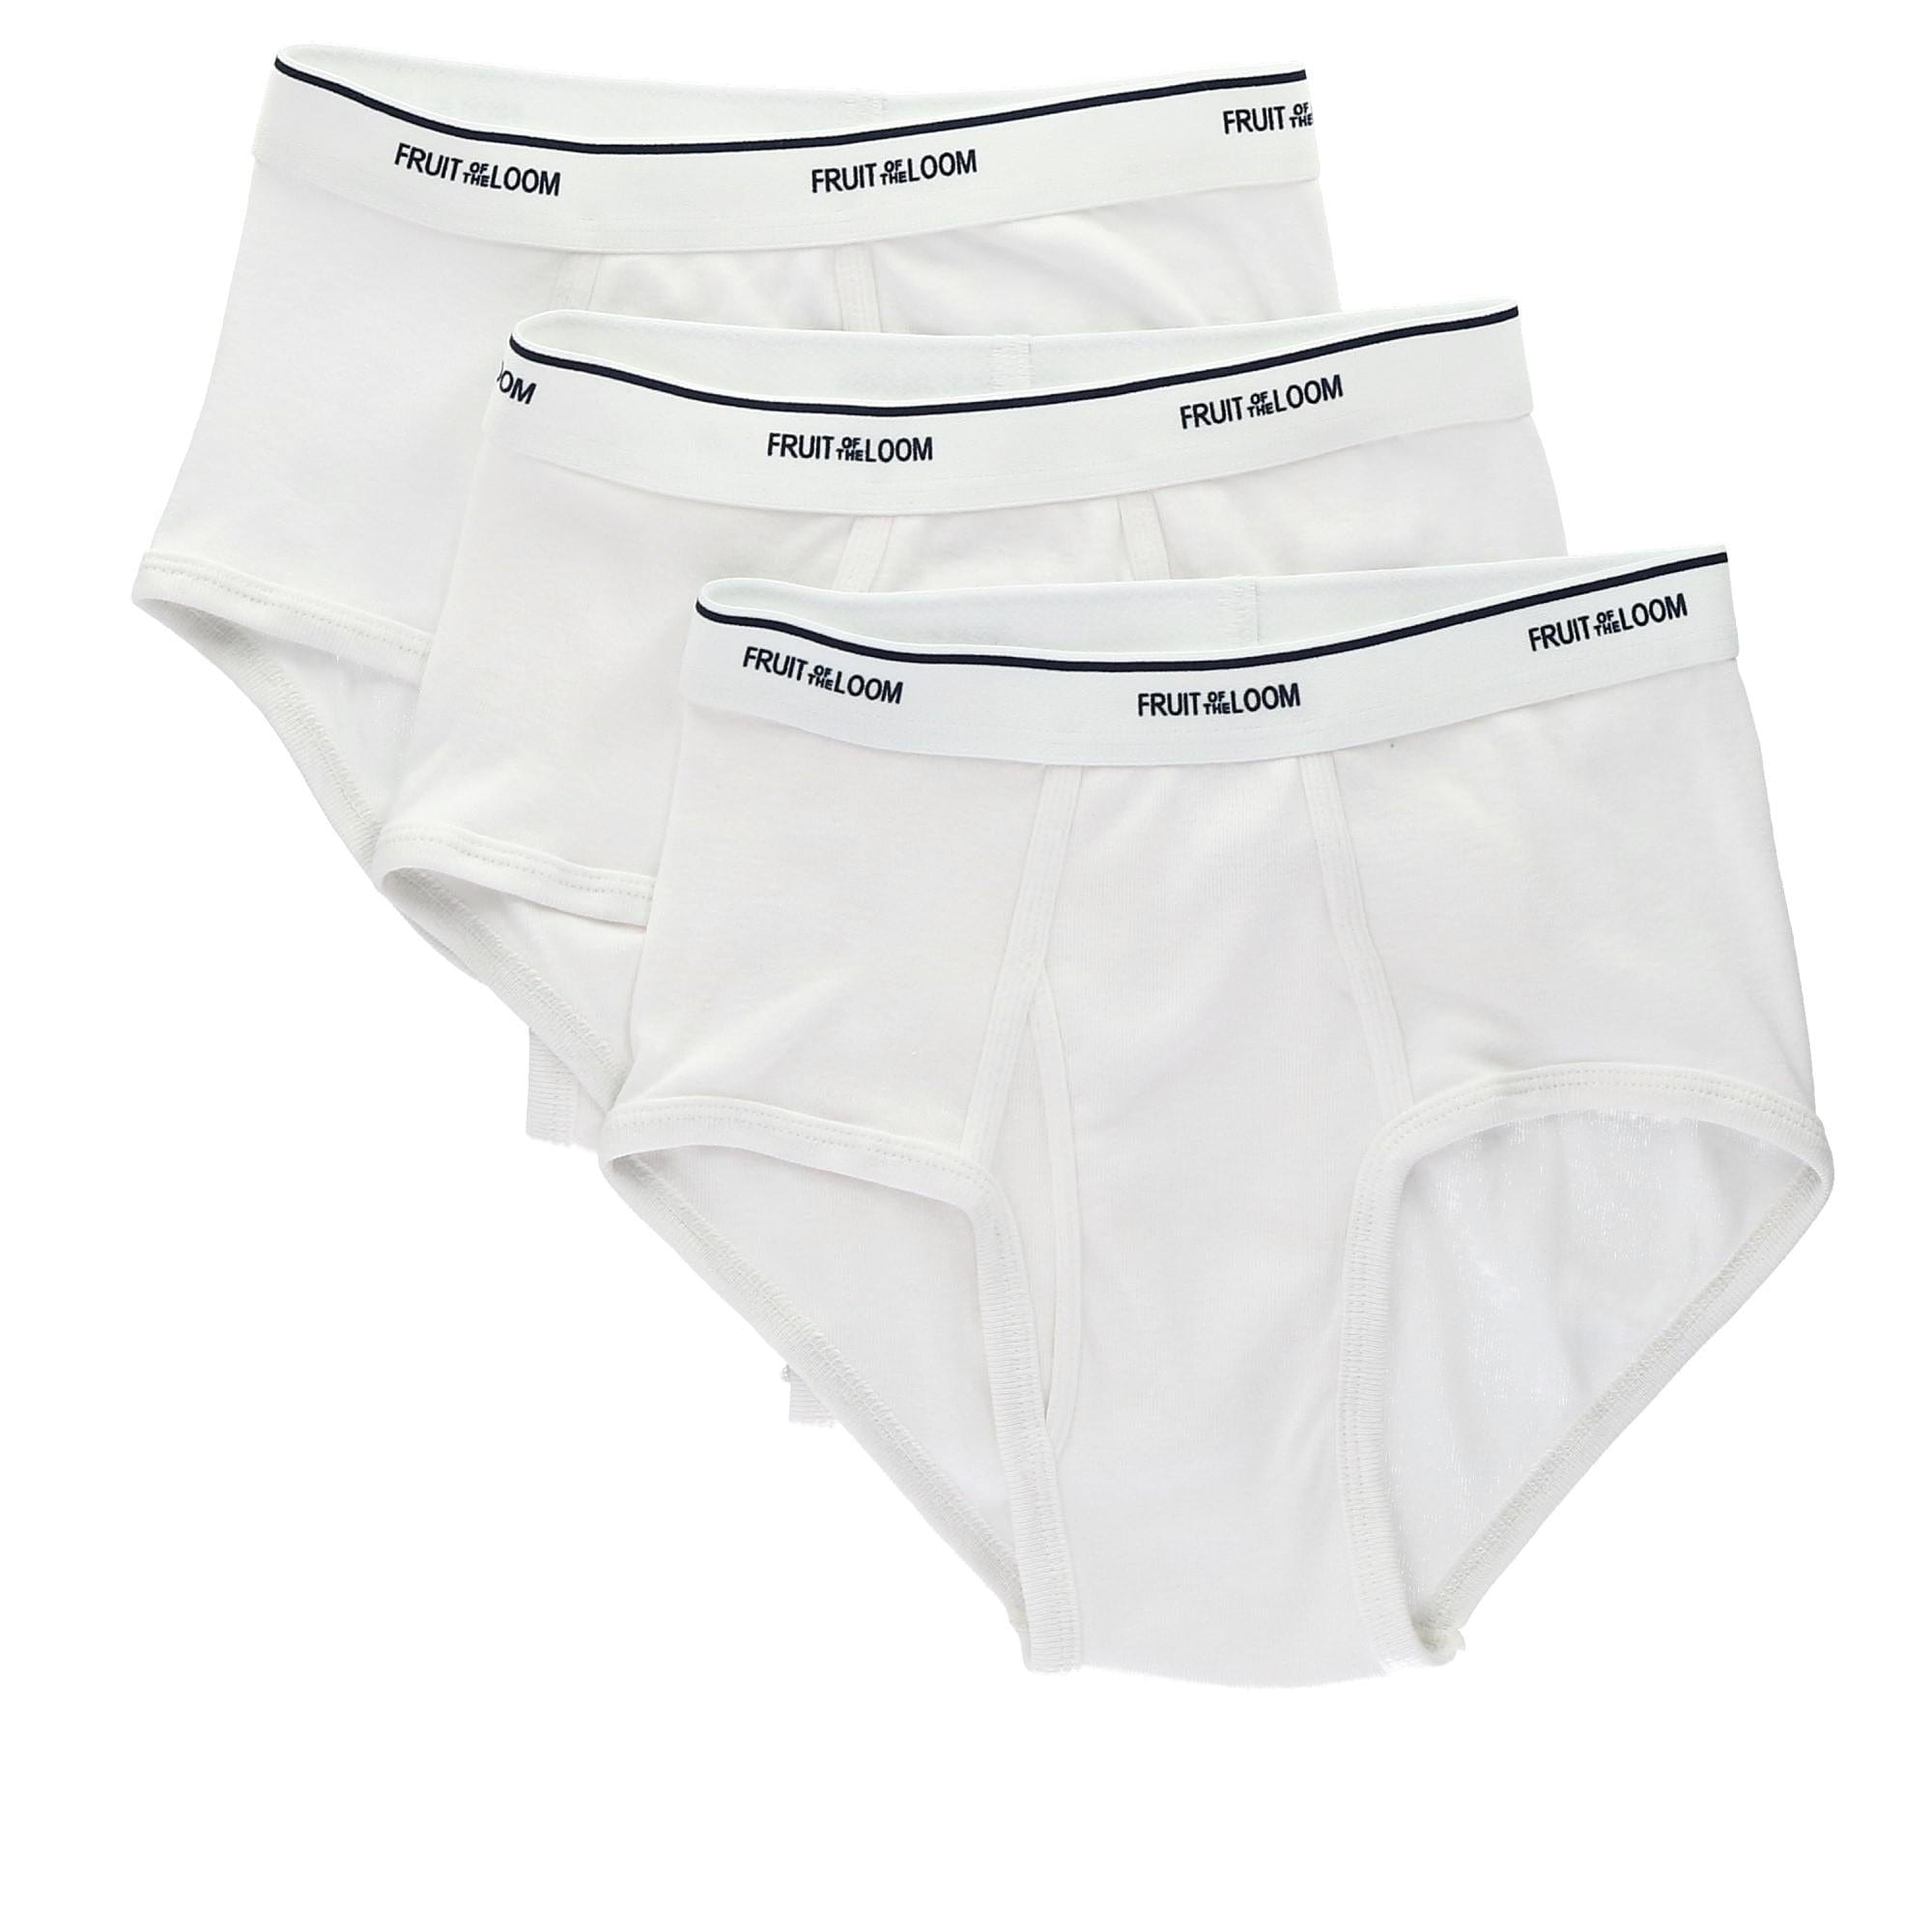 Fruit of the Loom Men's 3Pack Assorted Briefs Underwear, XL